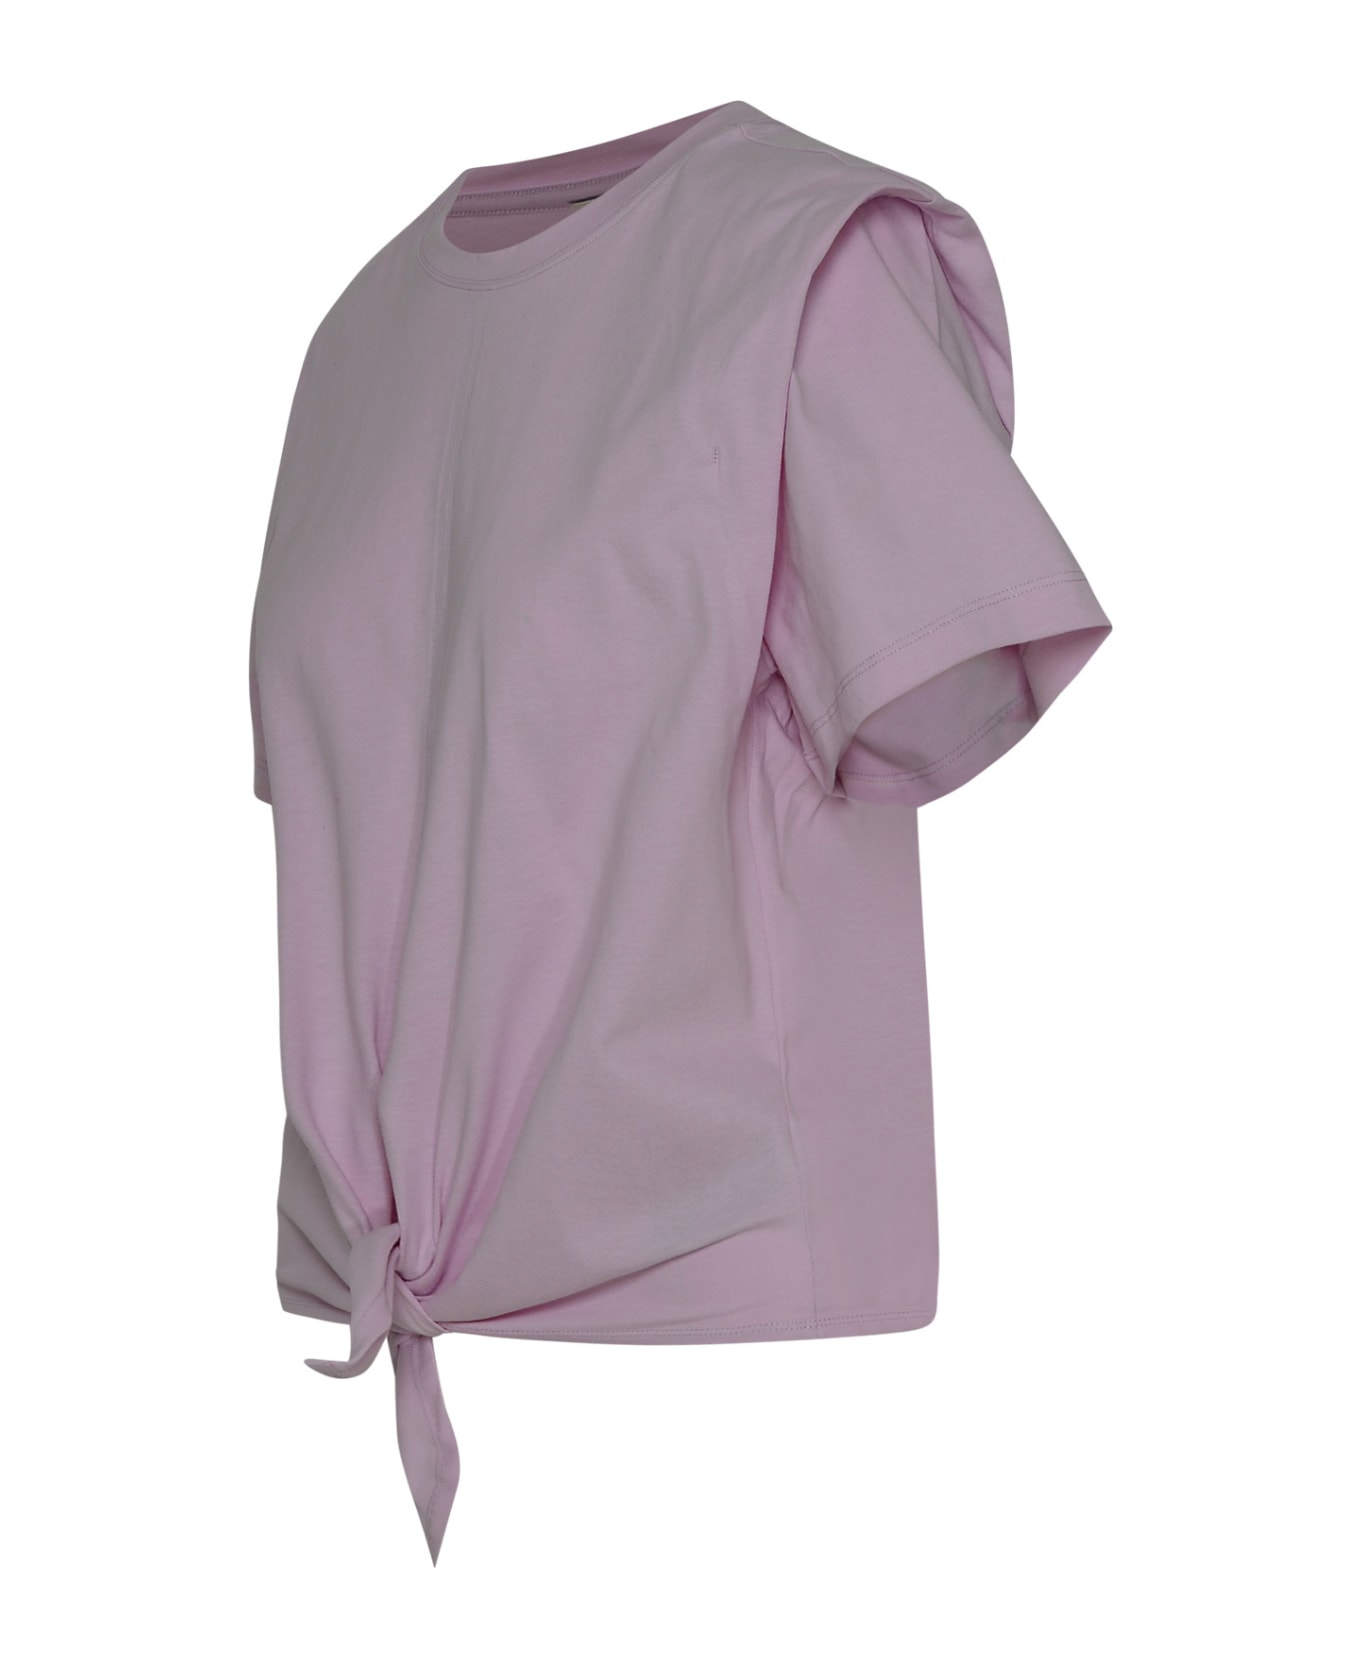 Isabel Marant Zelikia T-shirt - Light pink Tシャツ